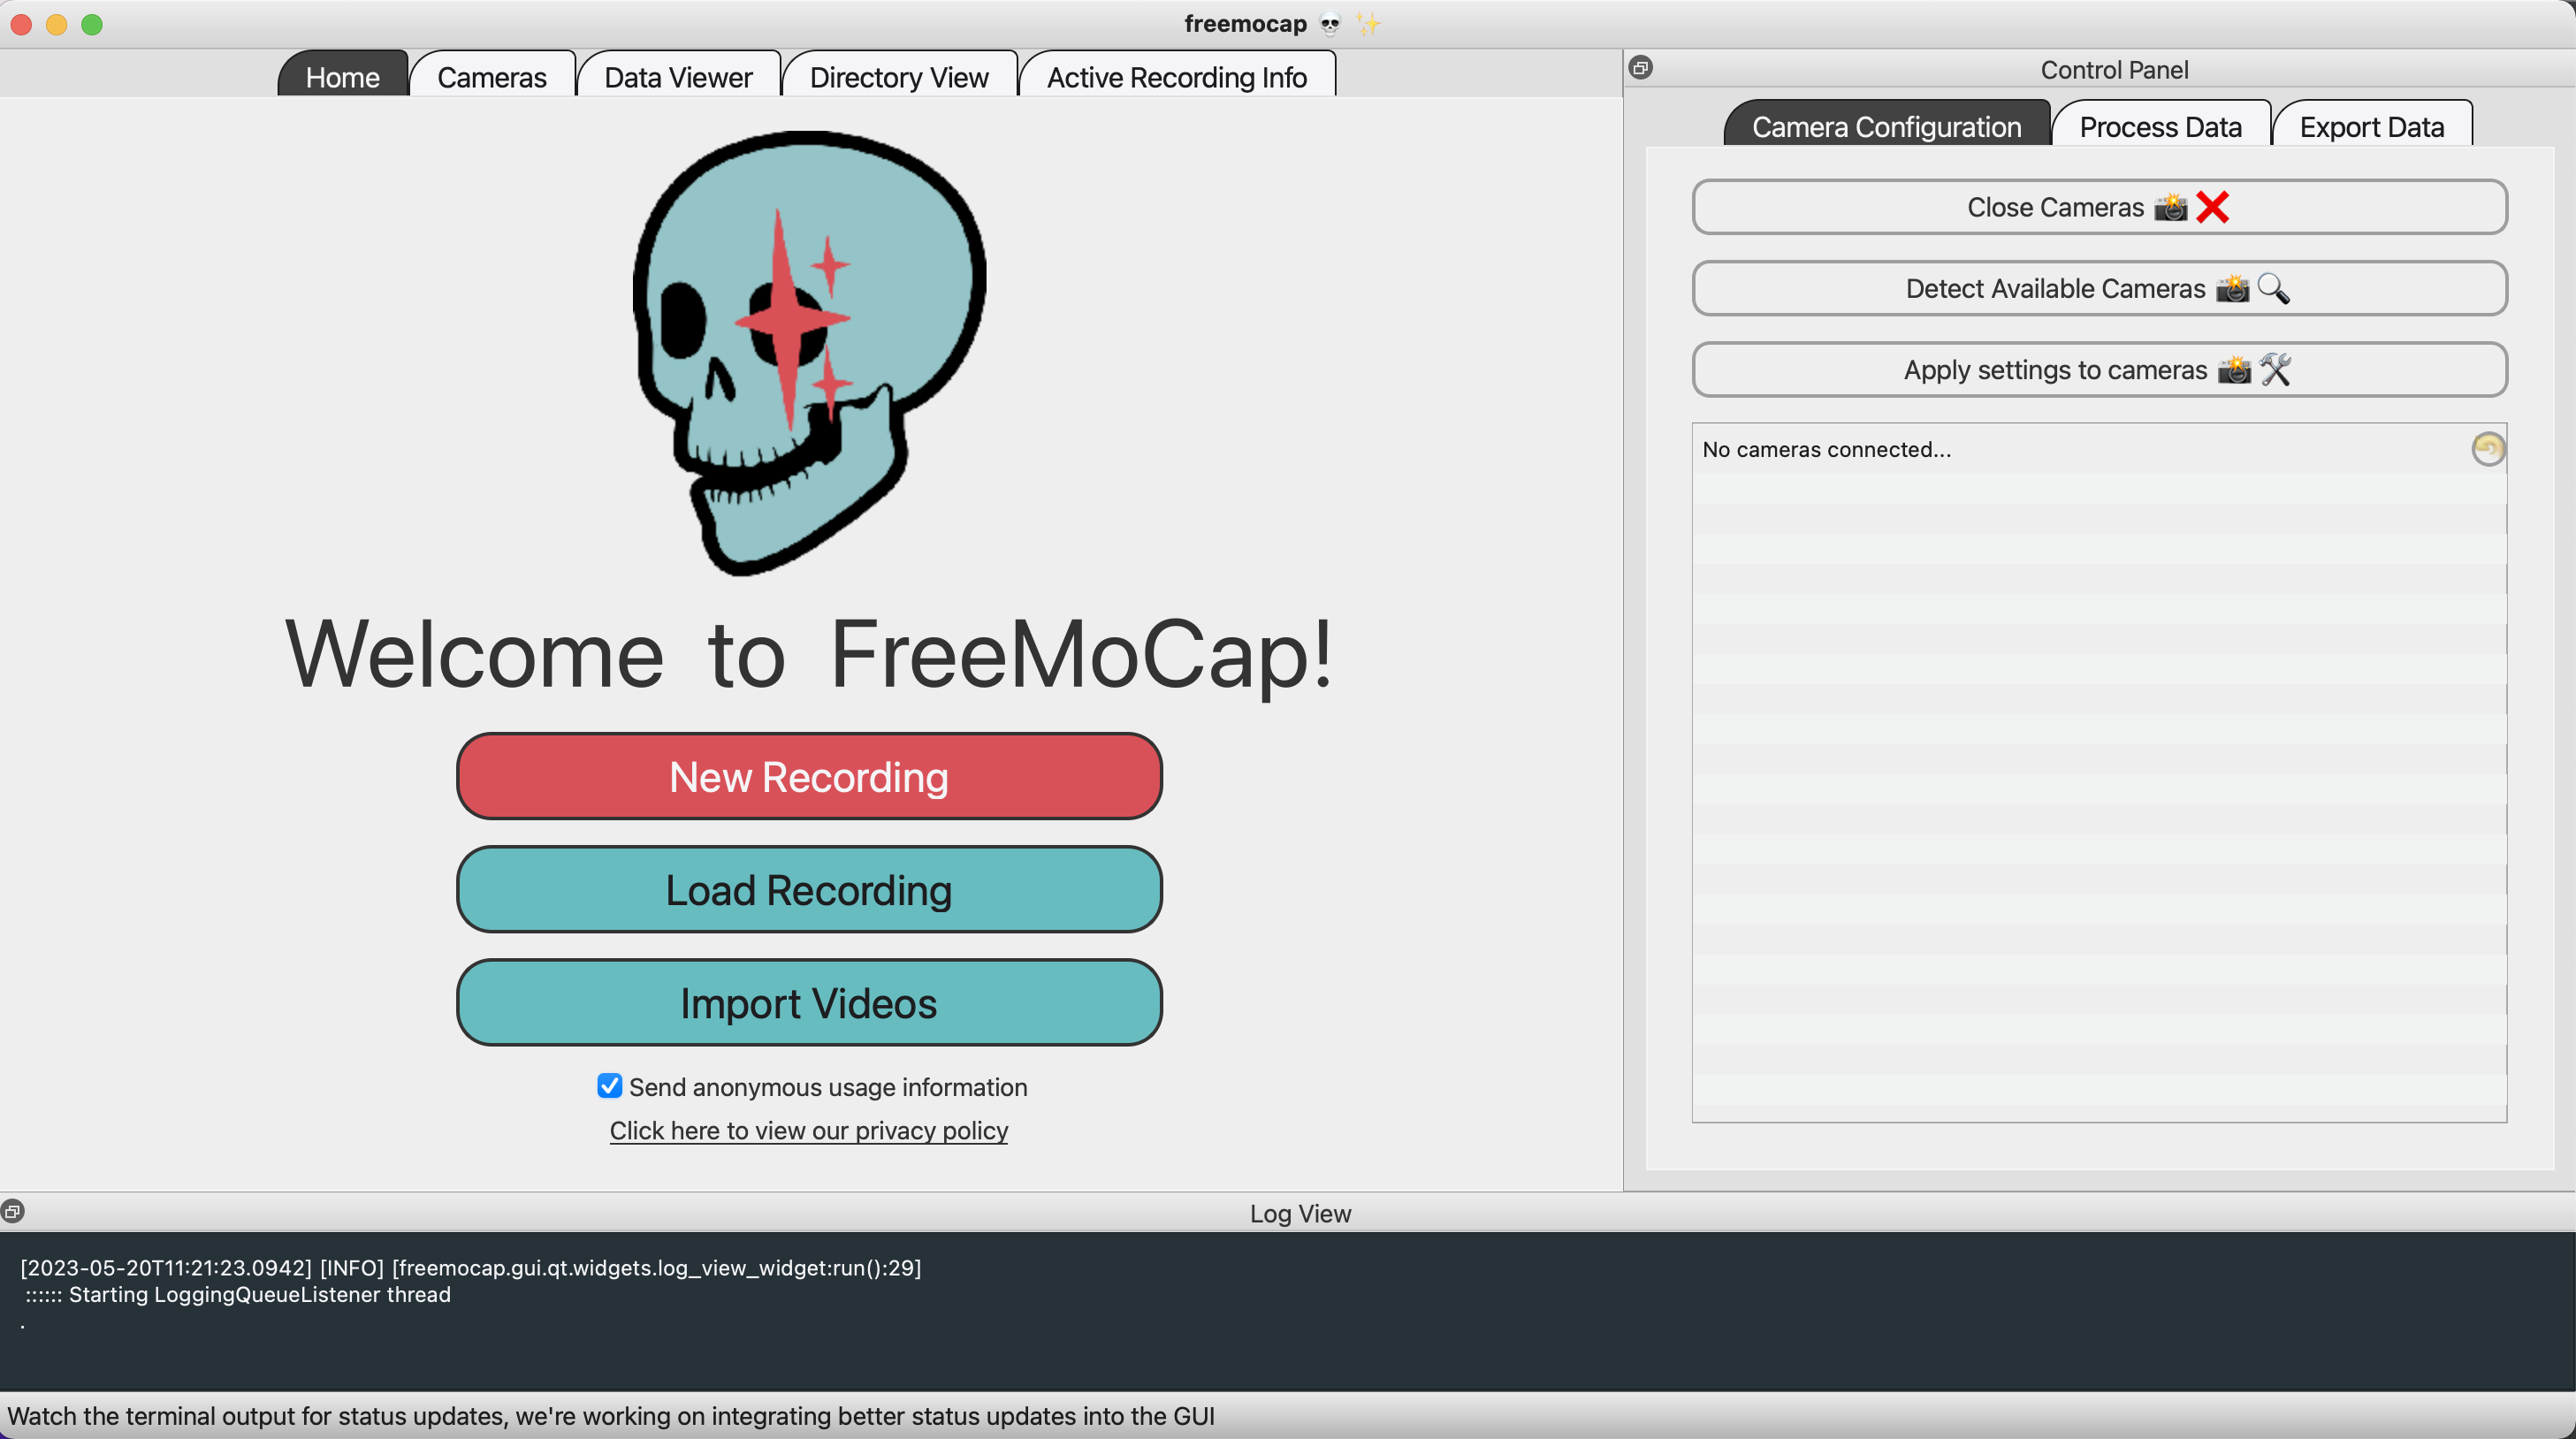 freemocap-gui-welcome-screen.png